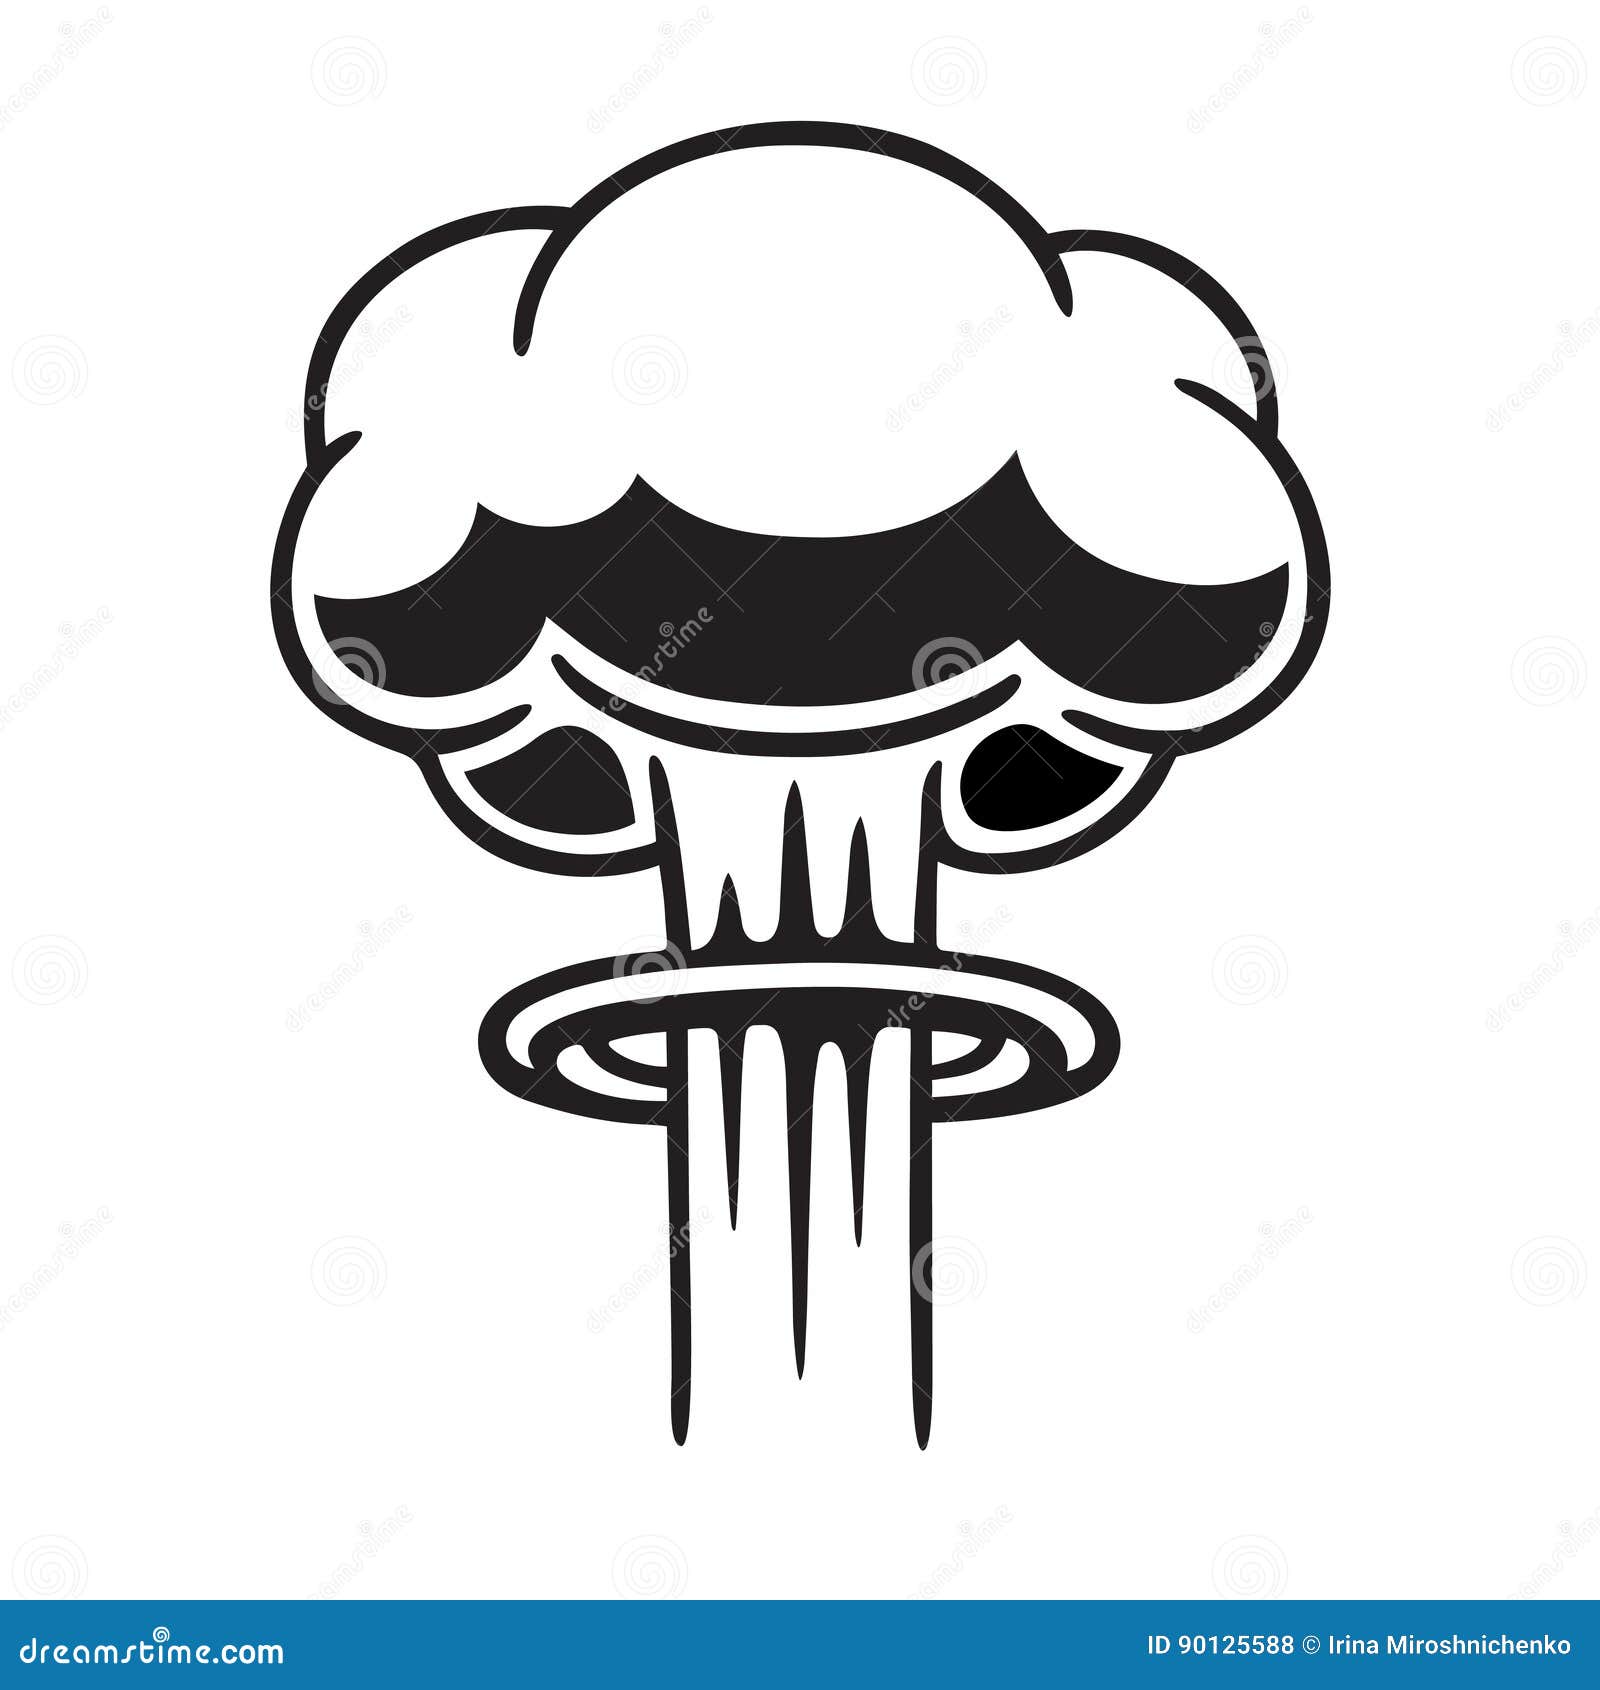 Nuclear mushroom cloud stock vector. Illustration of bomb - 90125588